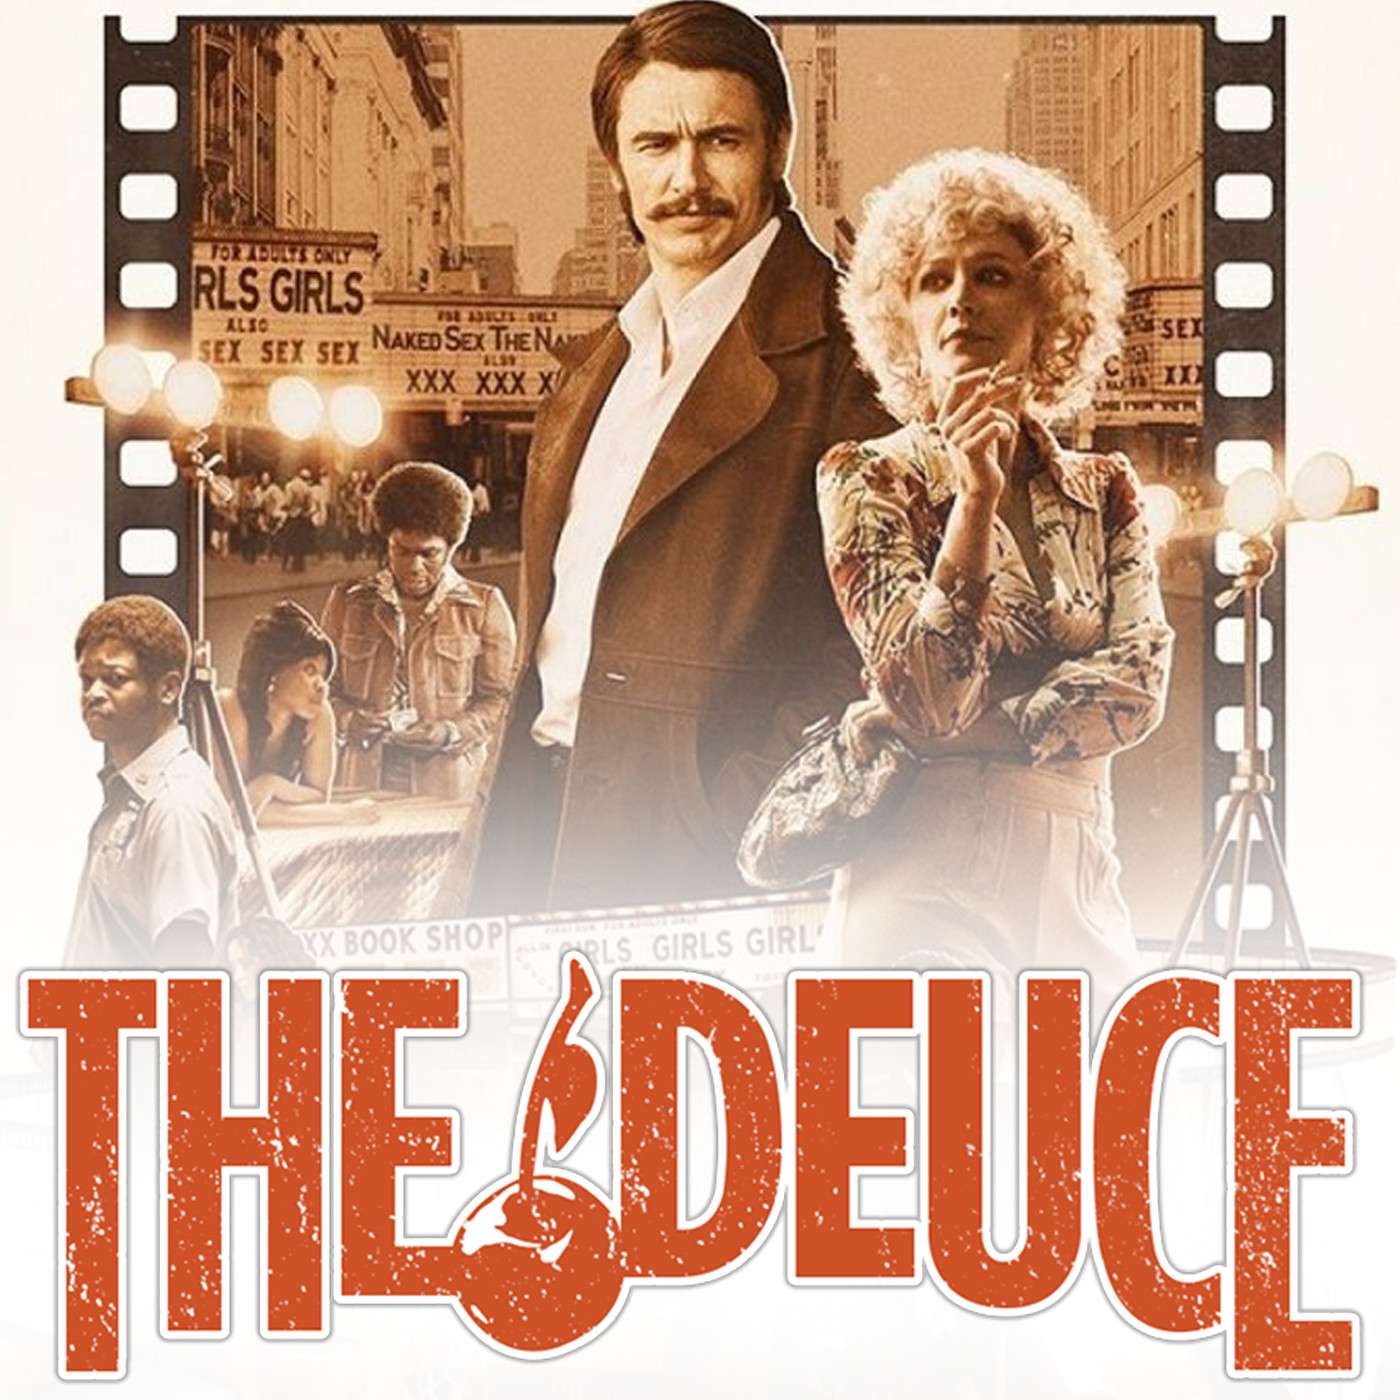 The Deuce